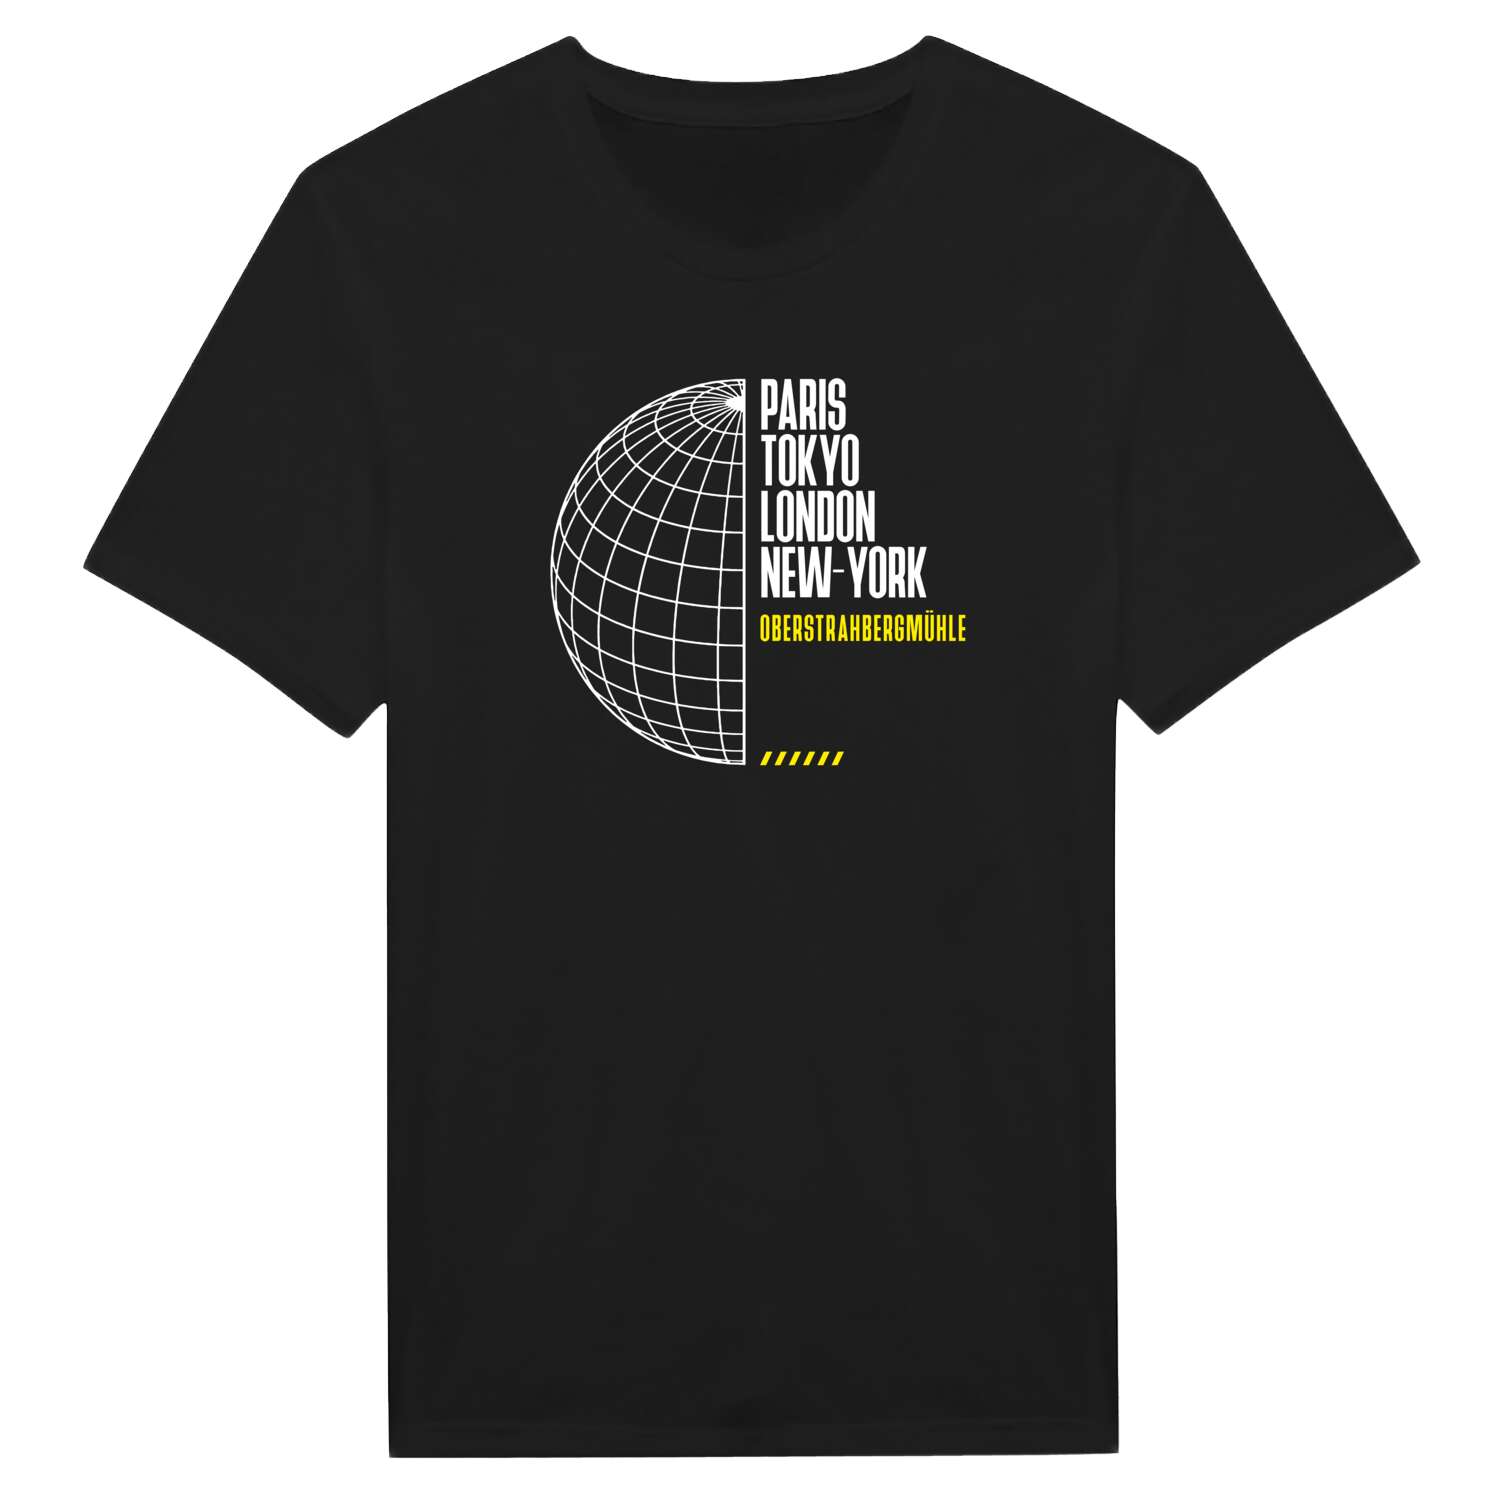 Oberstrahbergmühle T-Shirt »Paris Tokyo London«